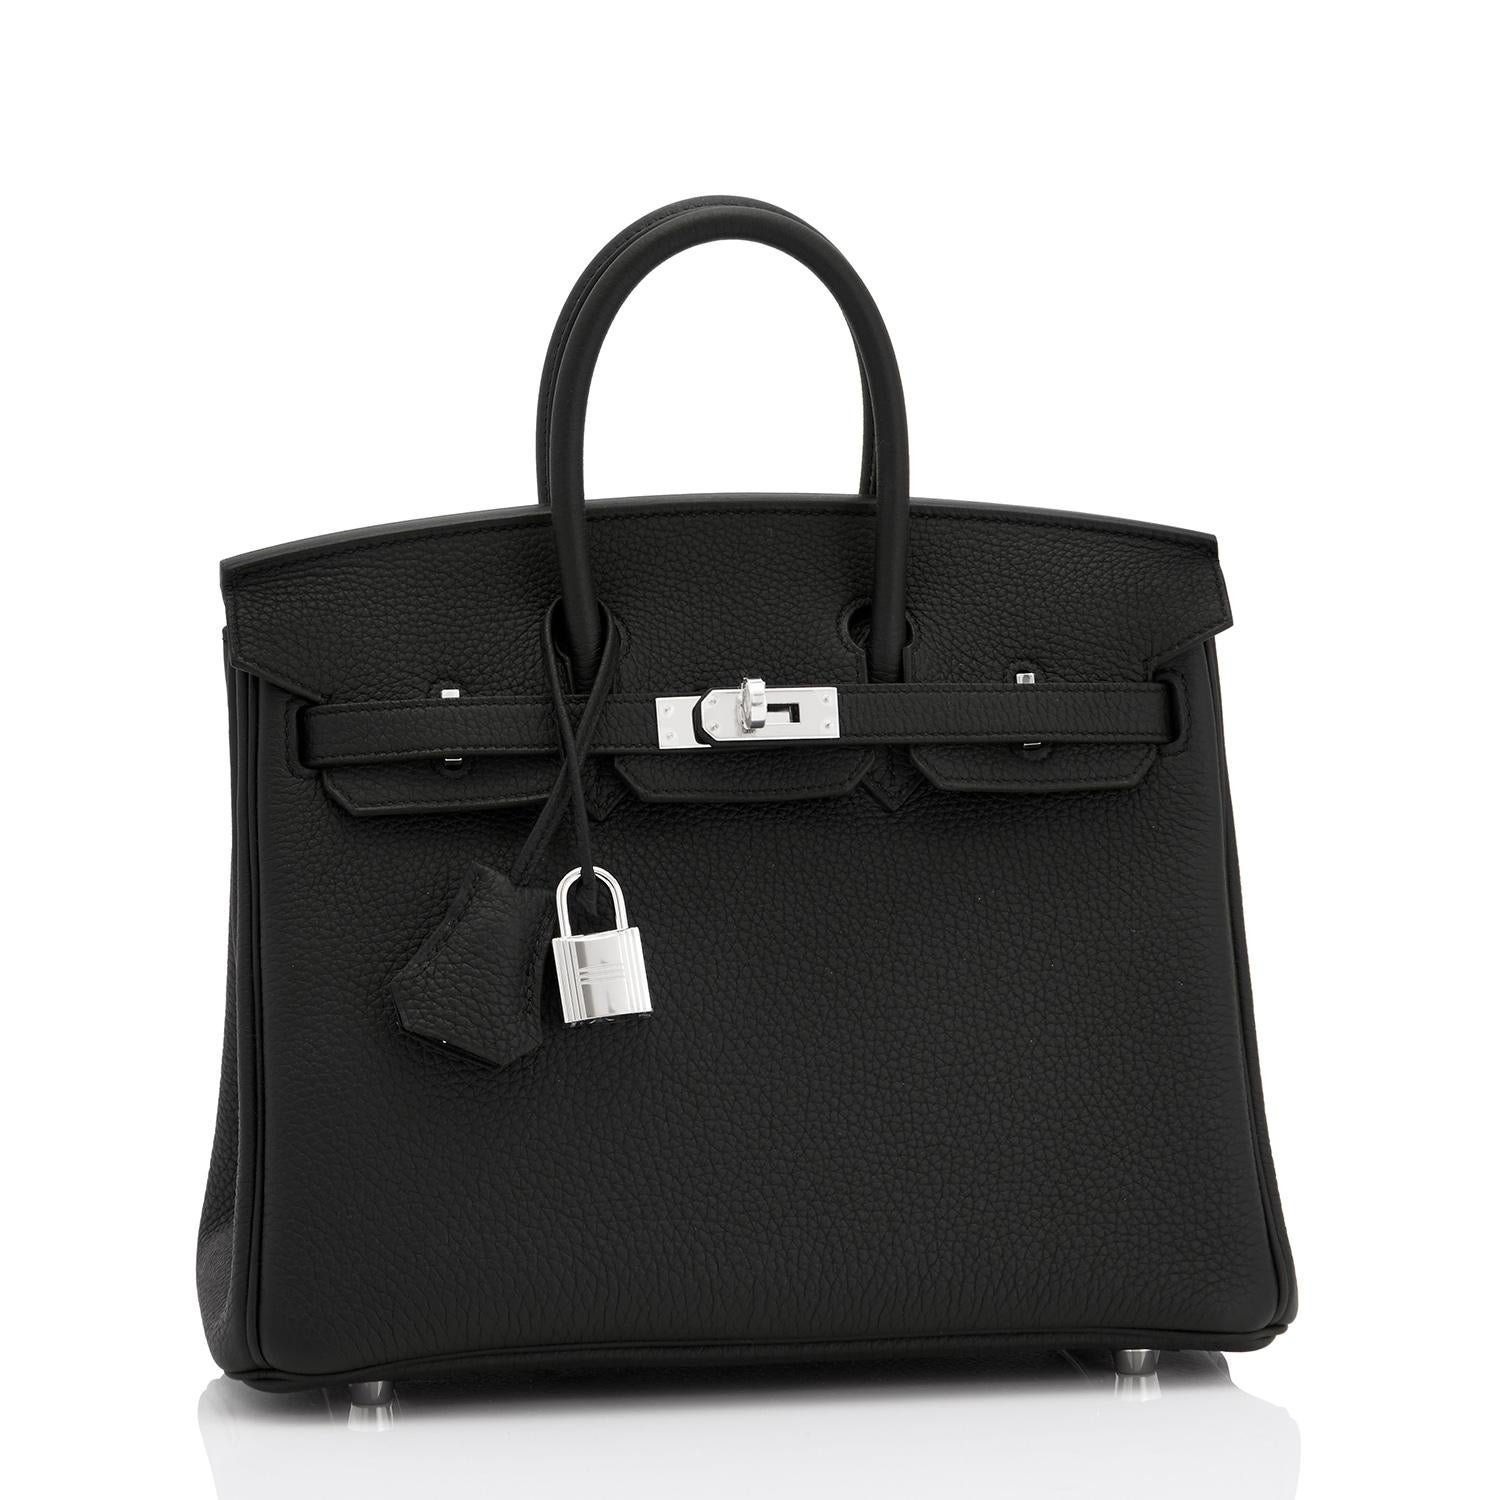 Hermes Birkin 25cm Black Togo Palladium Bag NEW 3